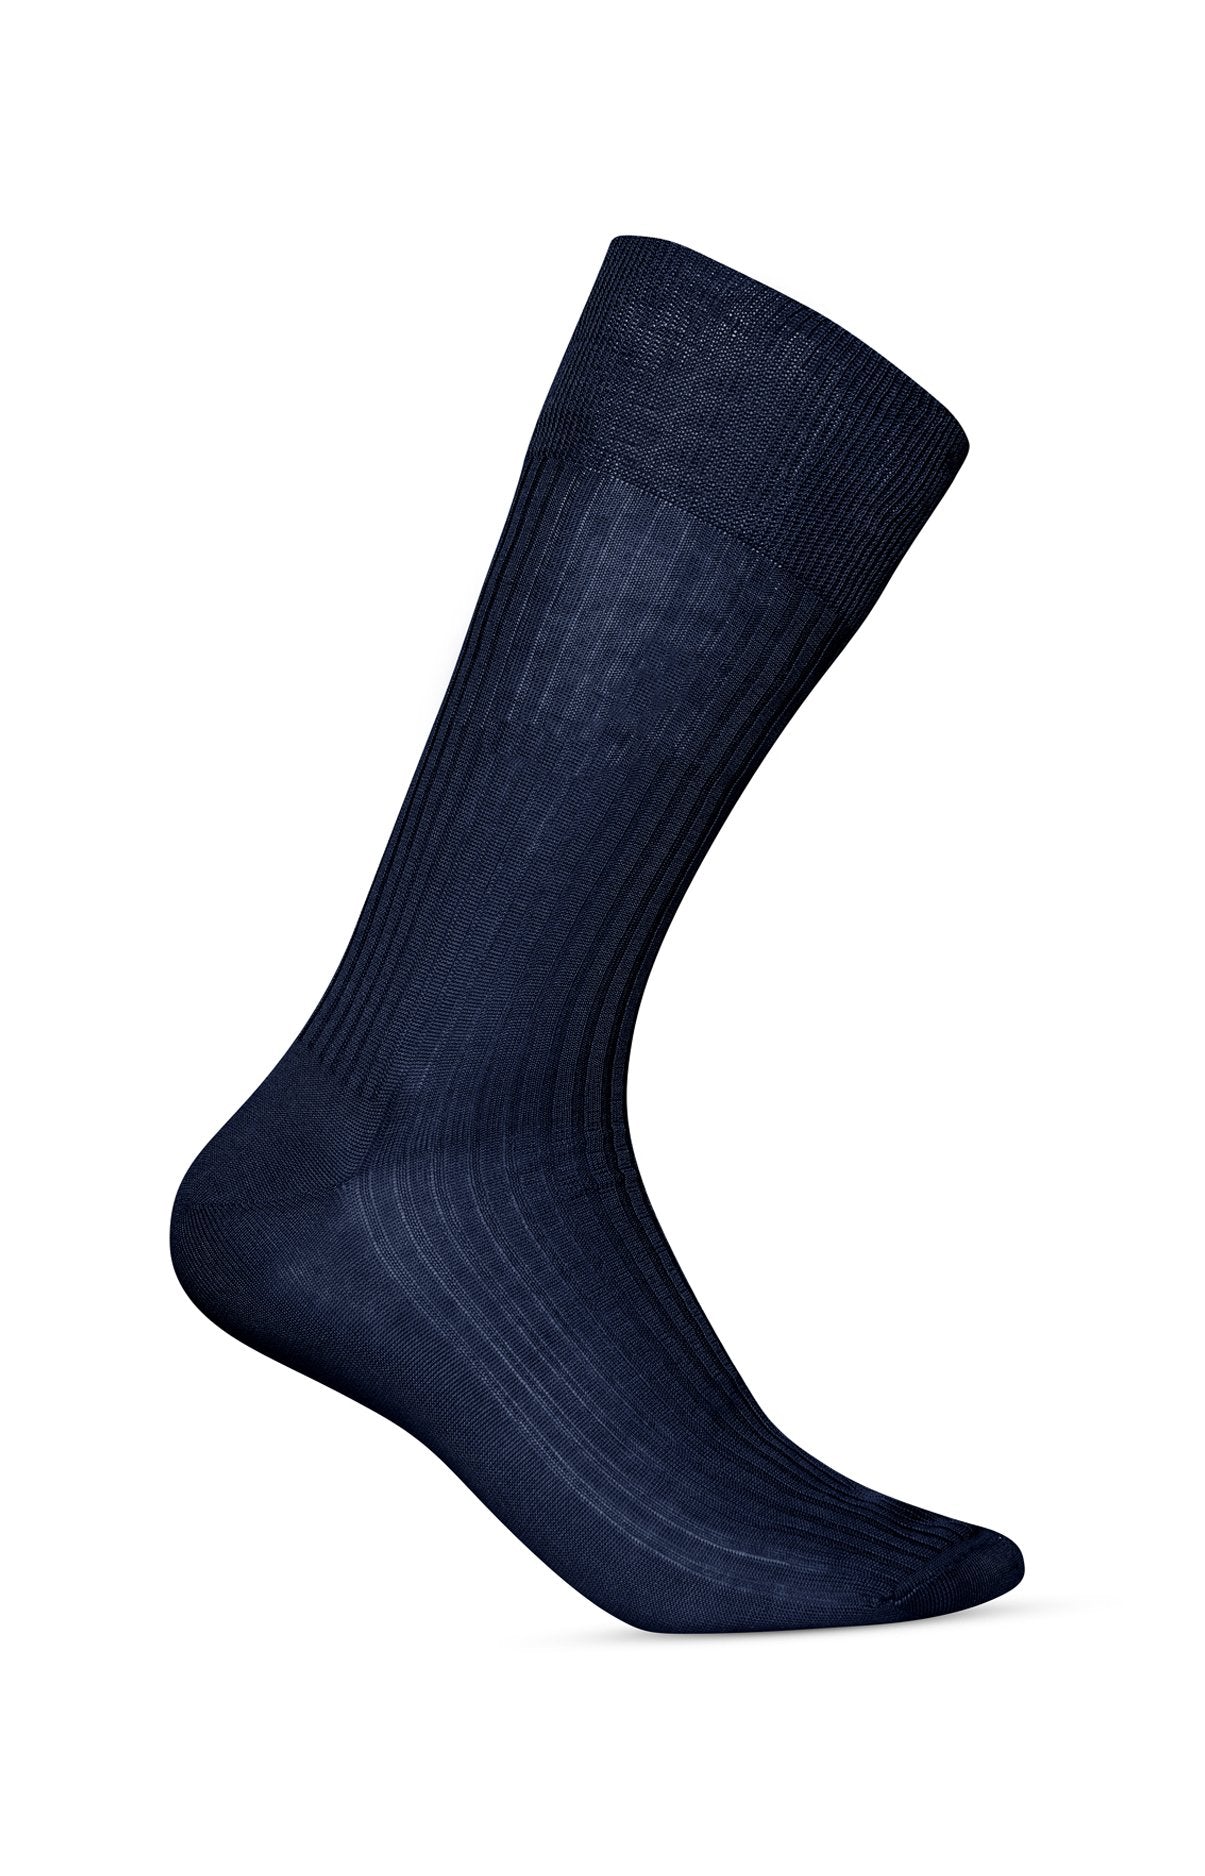 Pack of 2 socks - Scottish thread